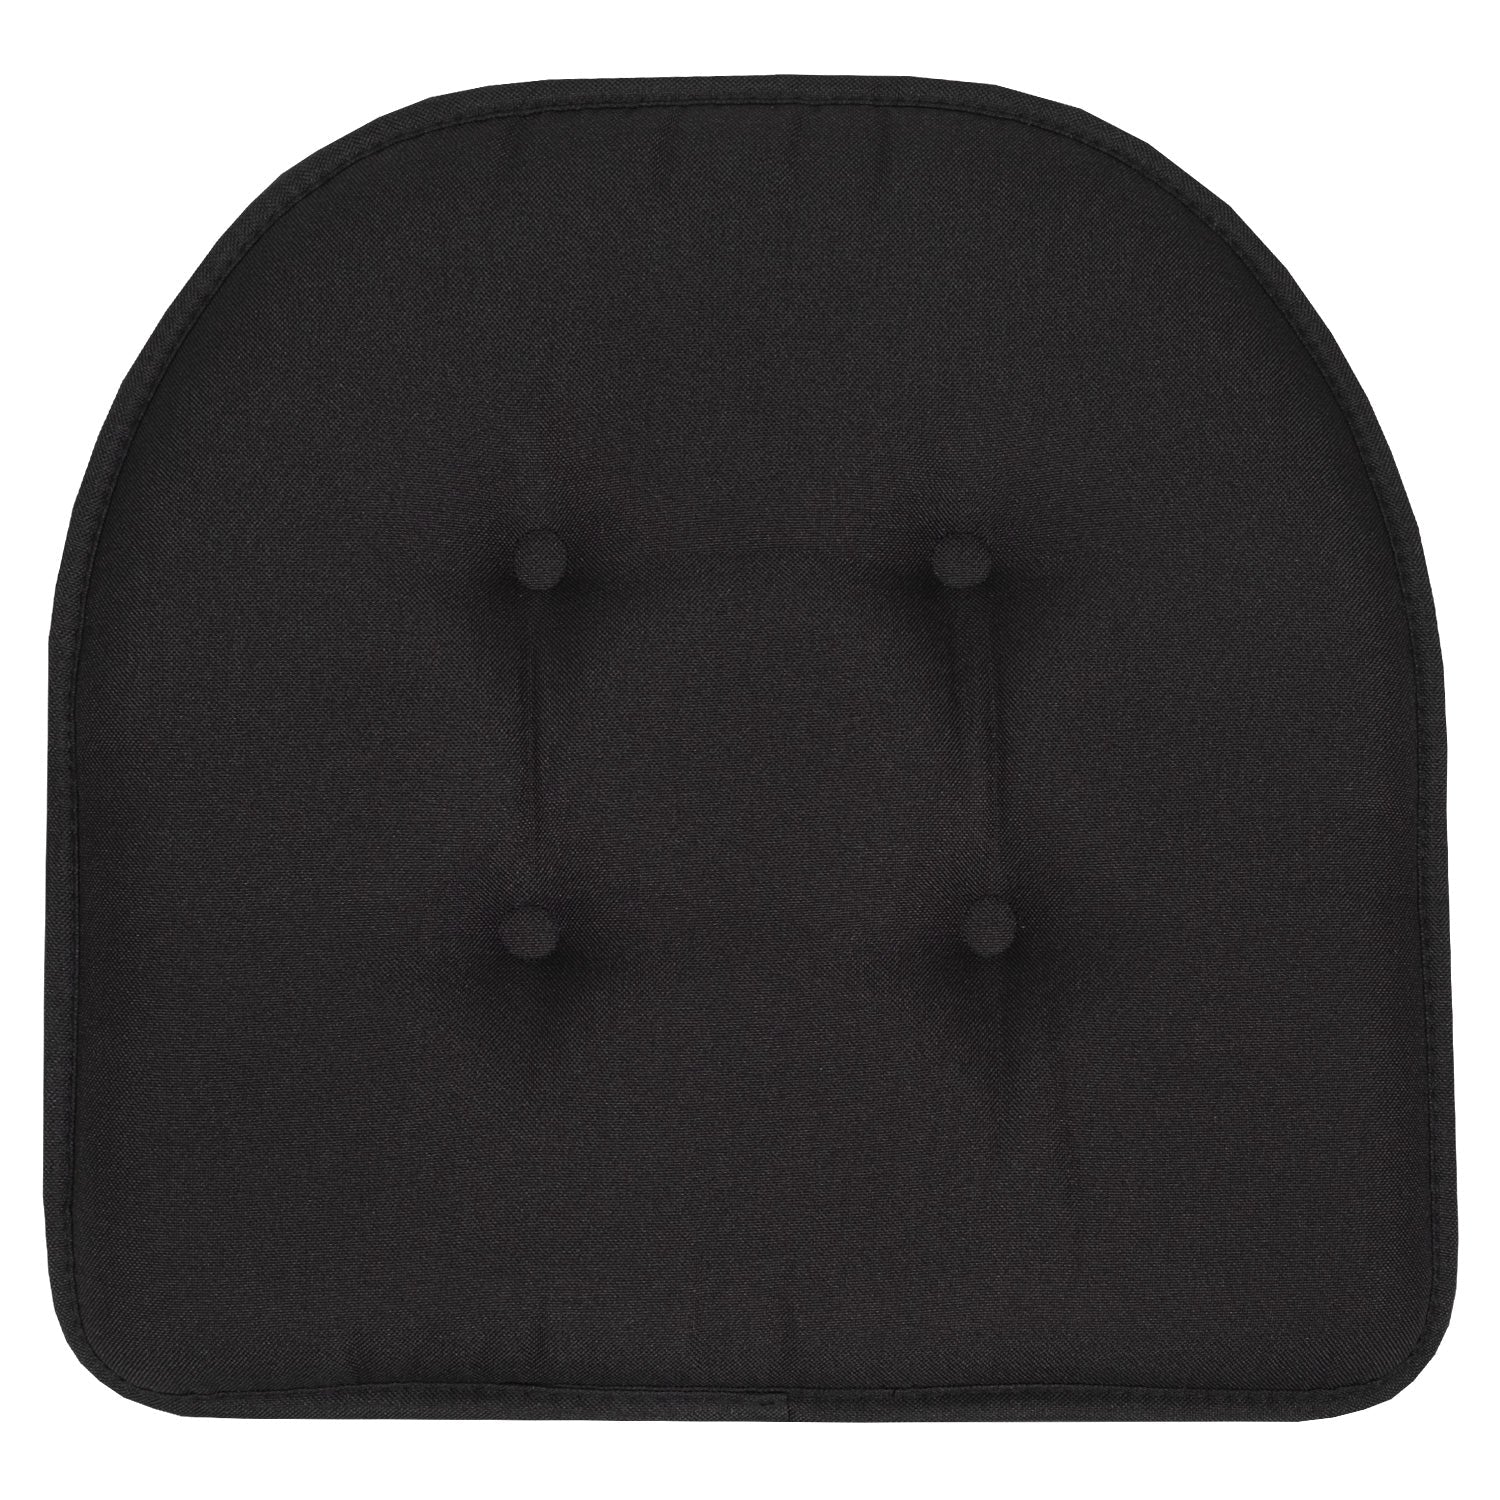 U-Shape Chair Cushion Set Black - Top